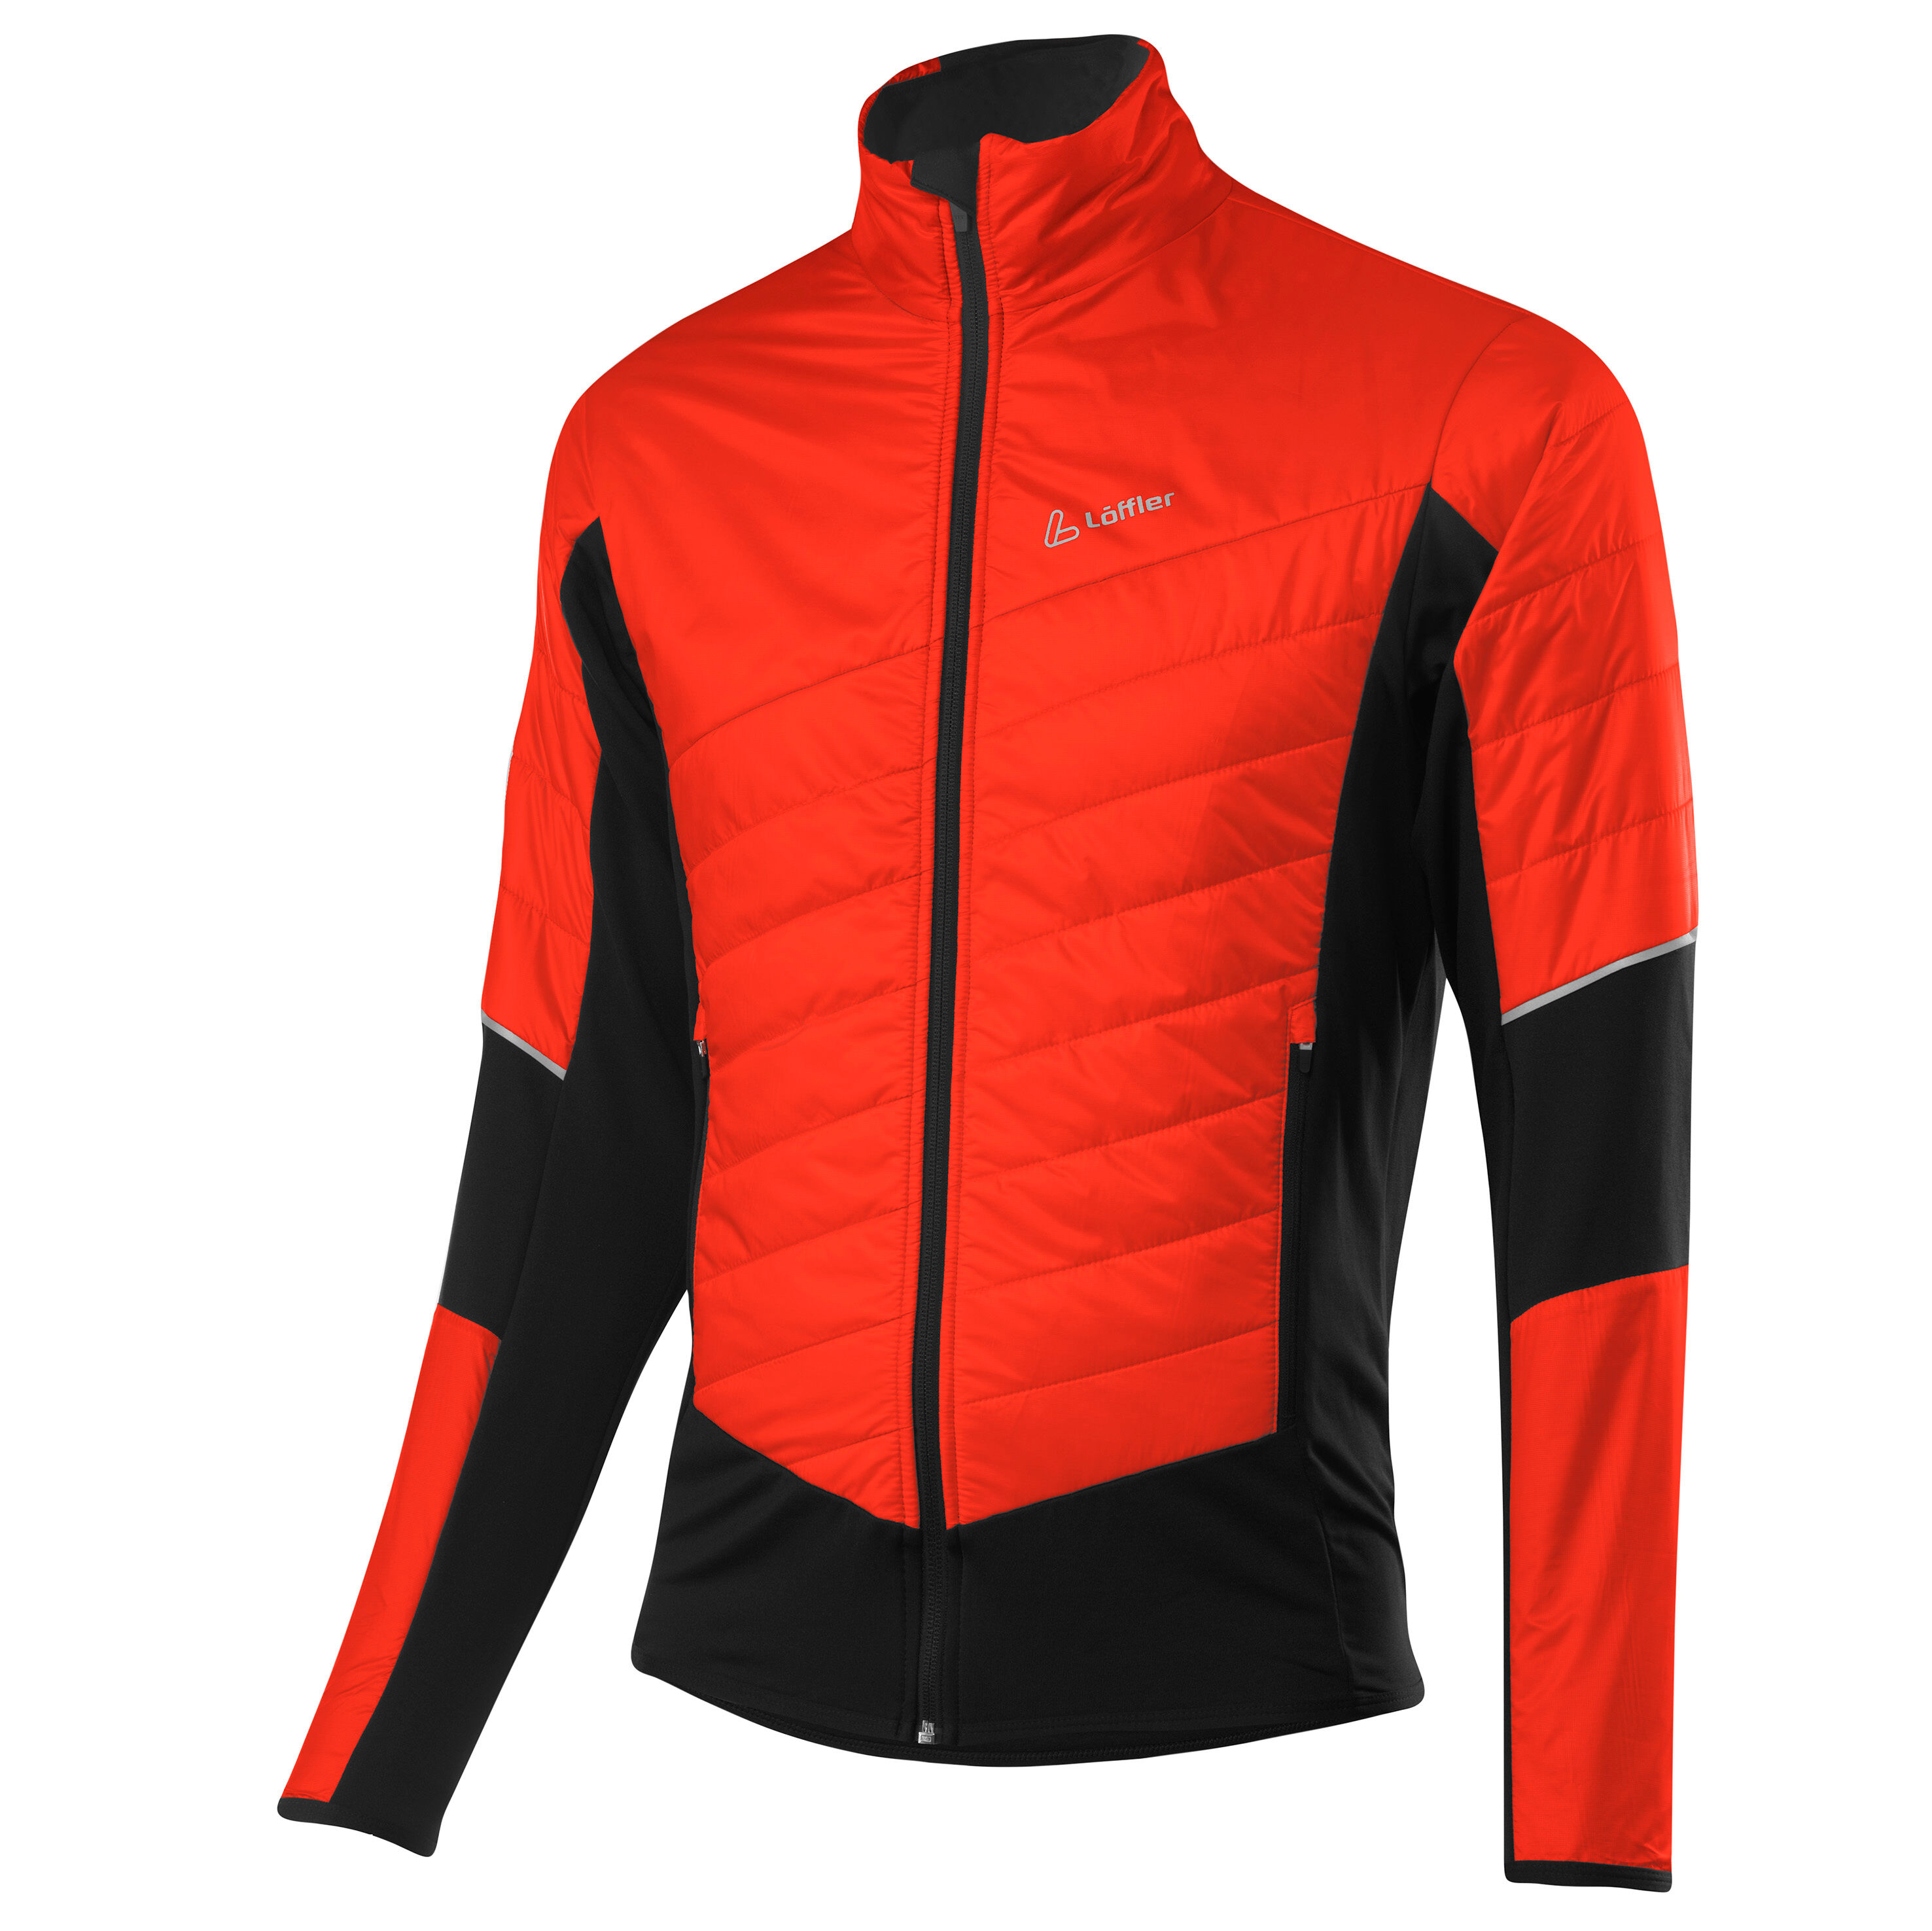 Loeffler Hybrid jacket Pl60 - Cross-country ski jacket - Men's